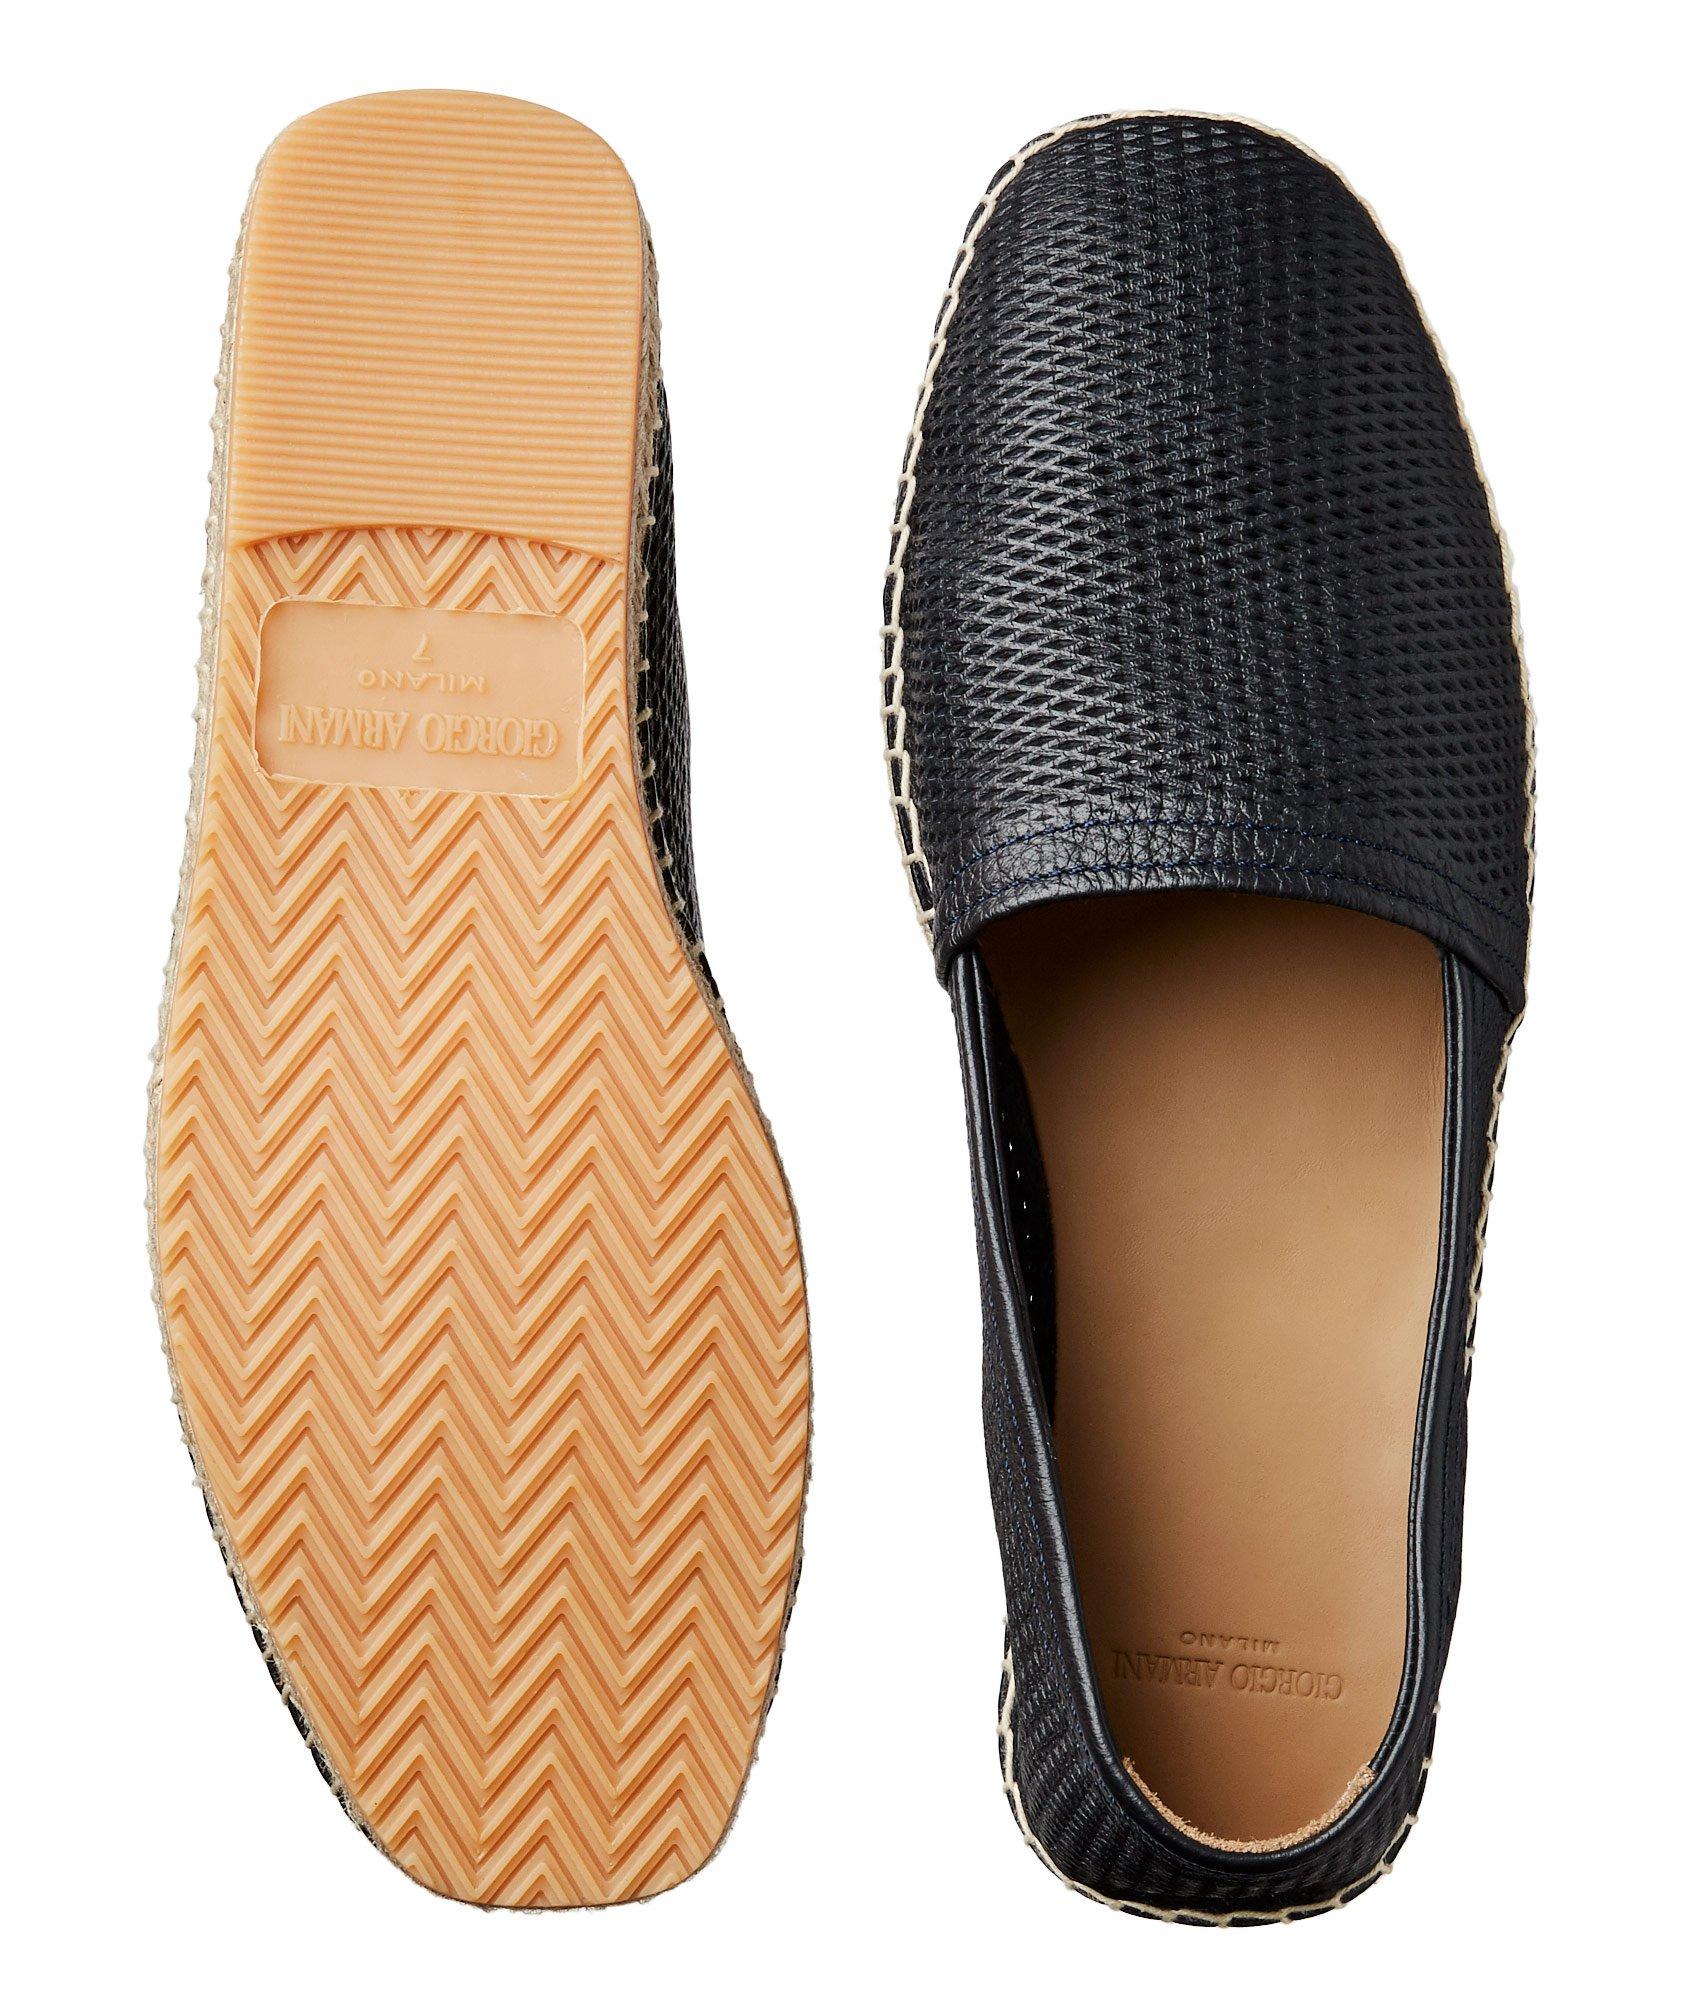 Giorgio Armani Perforated Leather Espadrilles | Casual Shoes | Harry Rosen